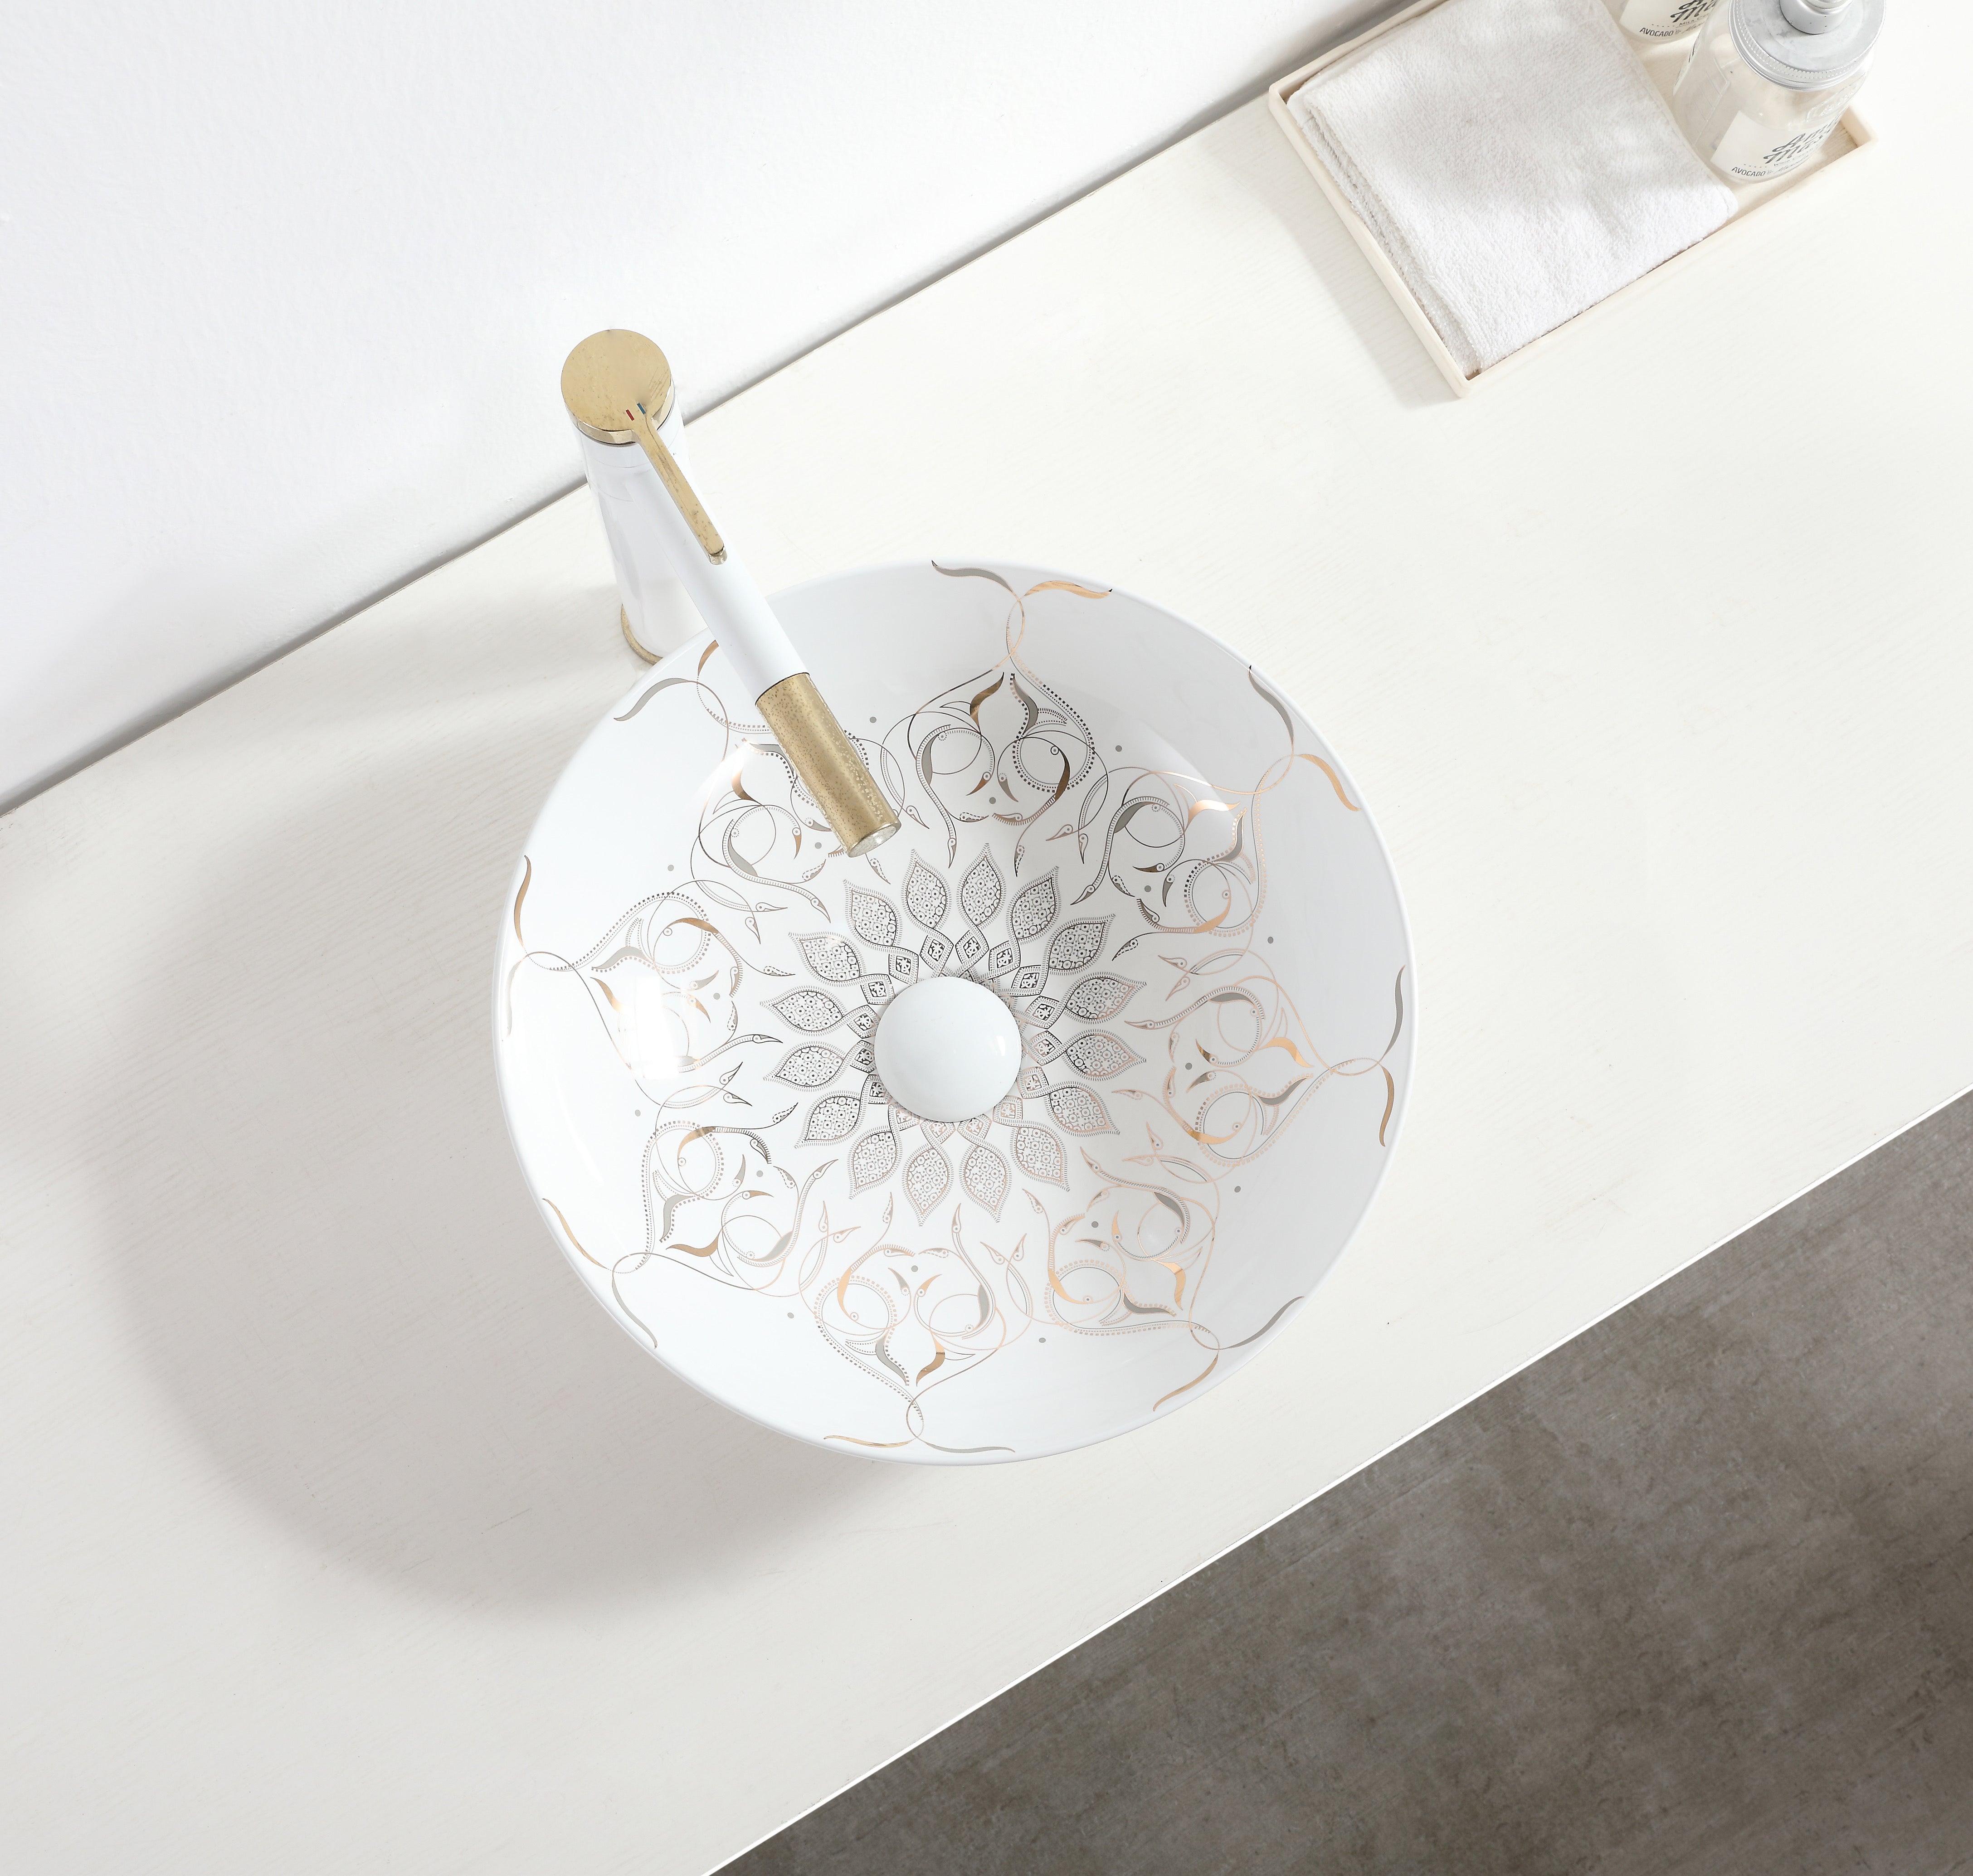 B Backline Ceramic Table Top, Counter Top Wash Basin Moroccan Design White 16 x 16 x 5 Inch